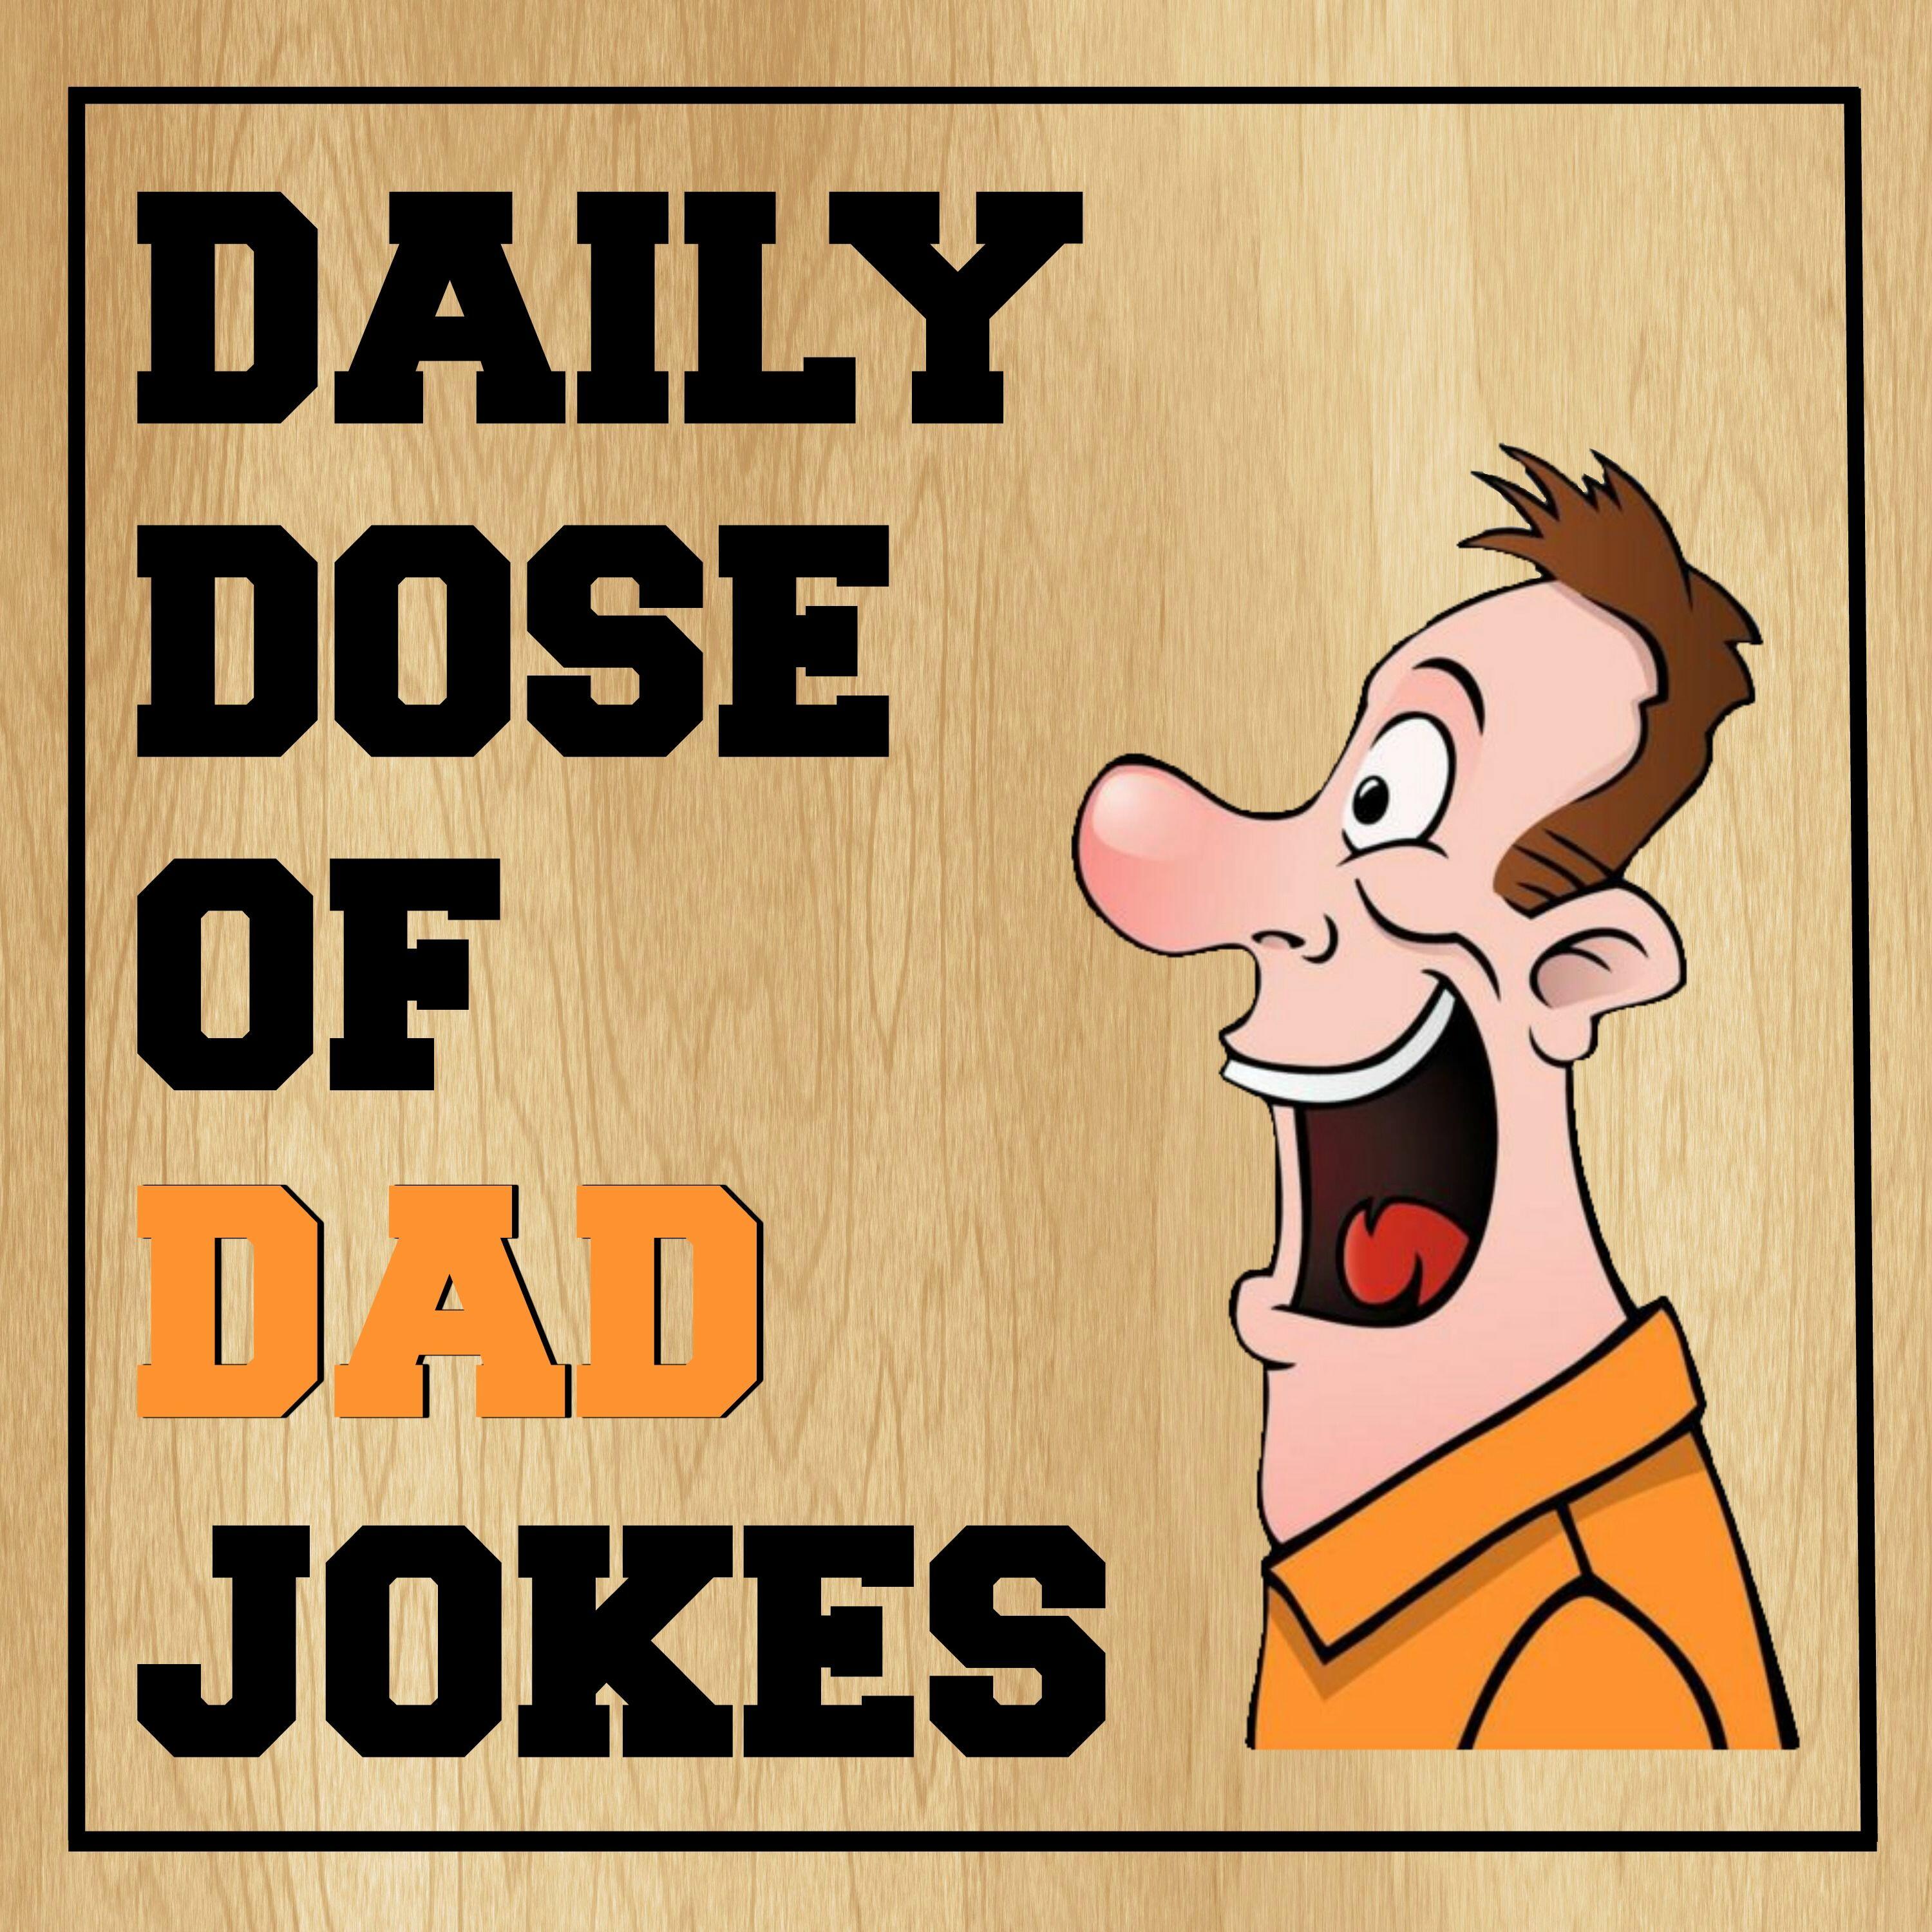 Dad jokes. Постер 648 "joke" 100х153 см. Daily dose. Подкаст анекдоты.